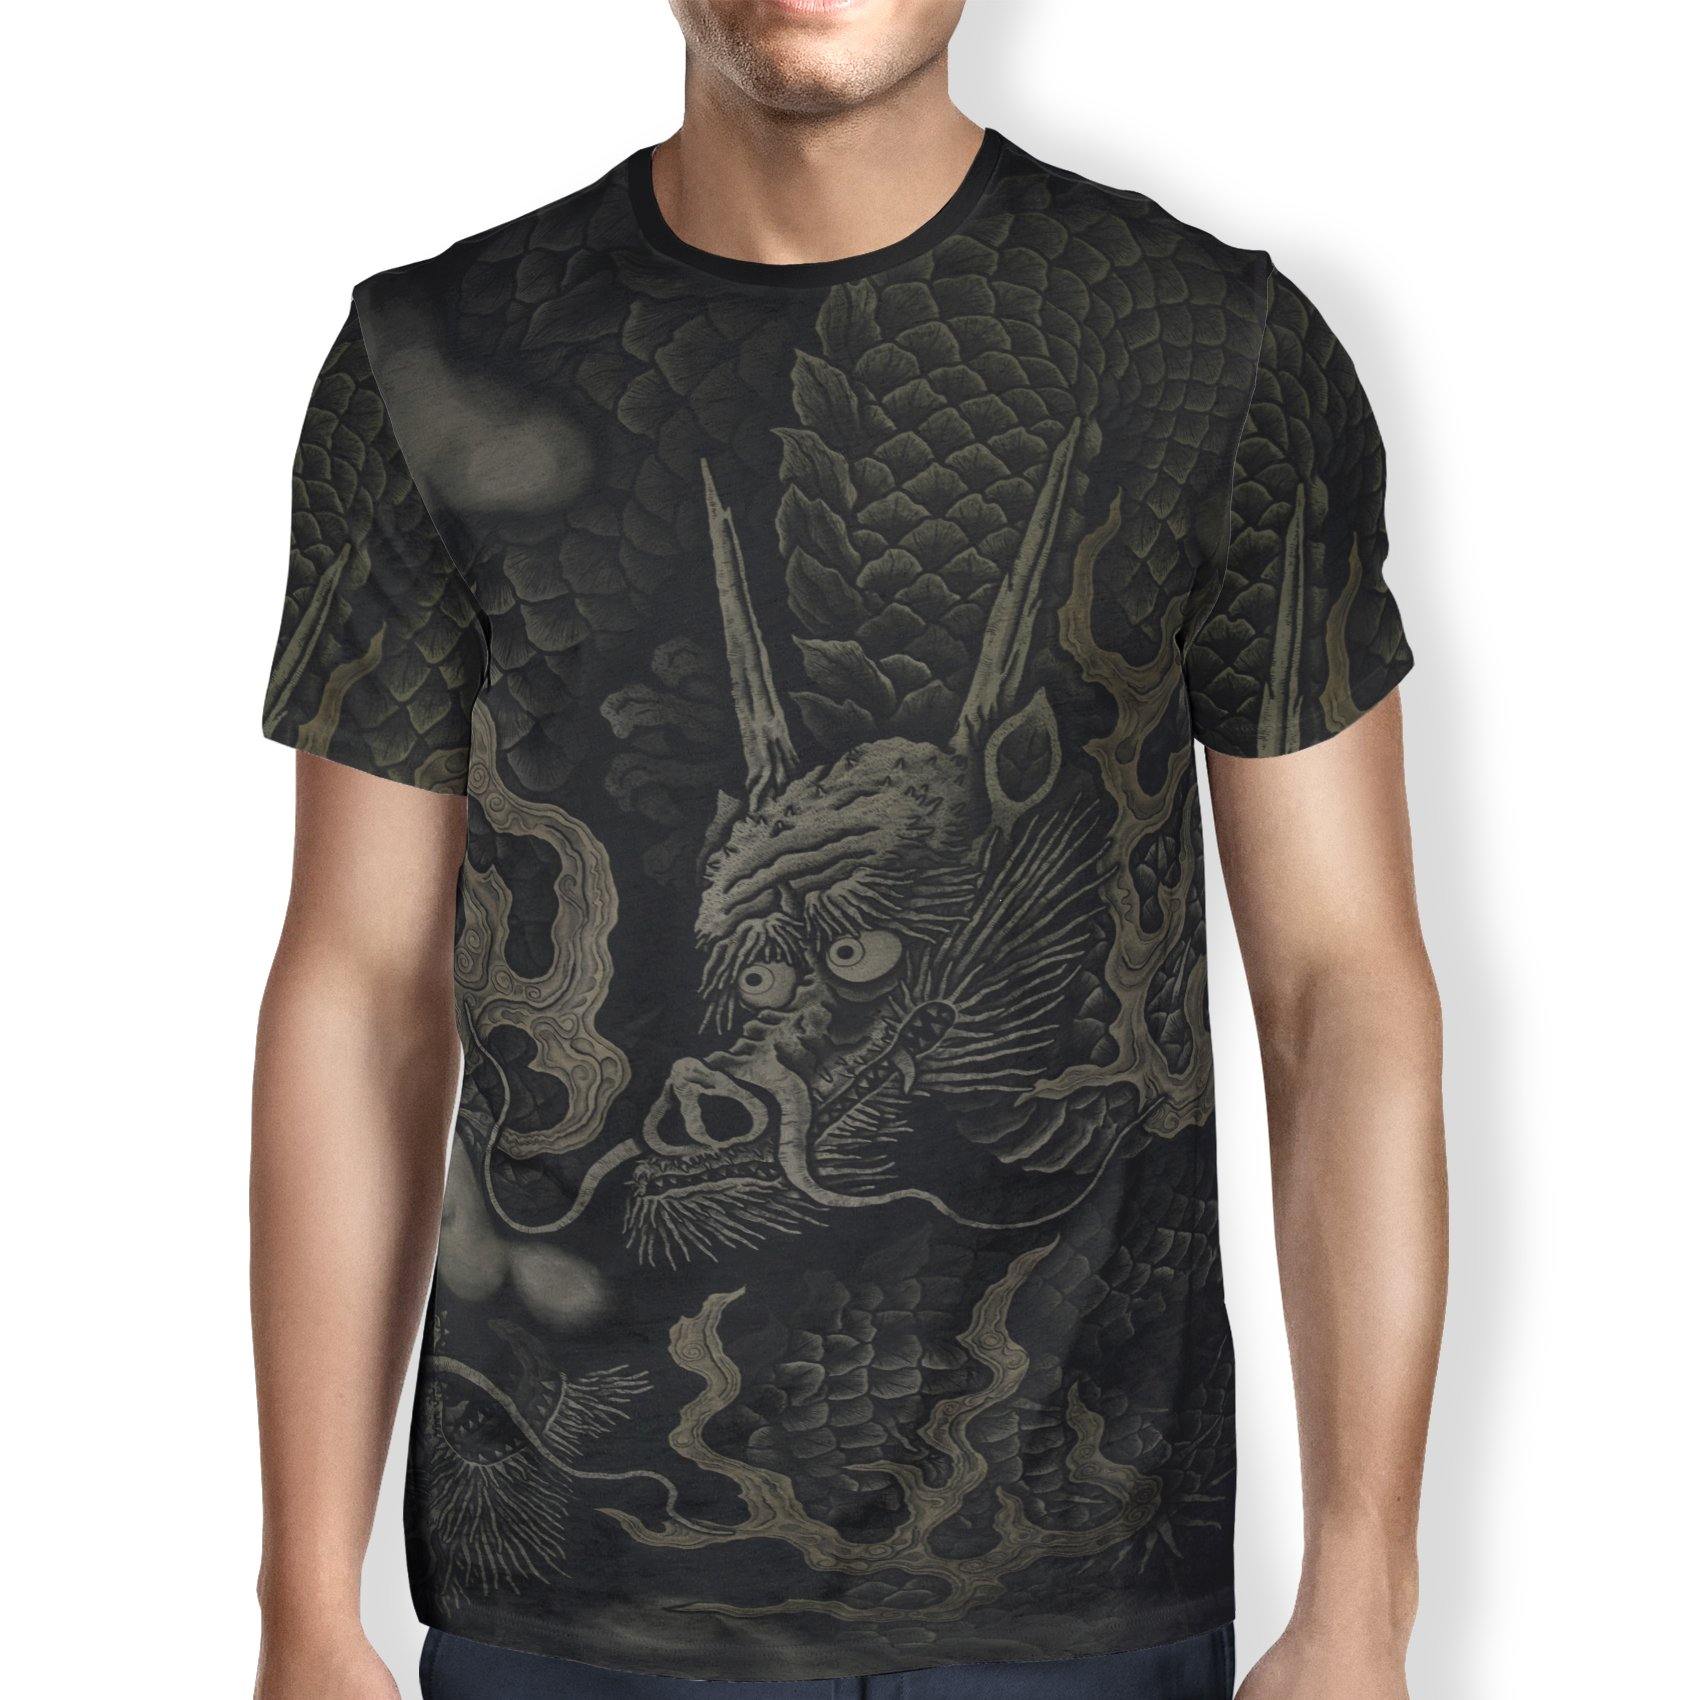 Wise Dragons Men's T-shirt - USA Made Dropship